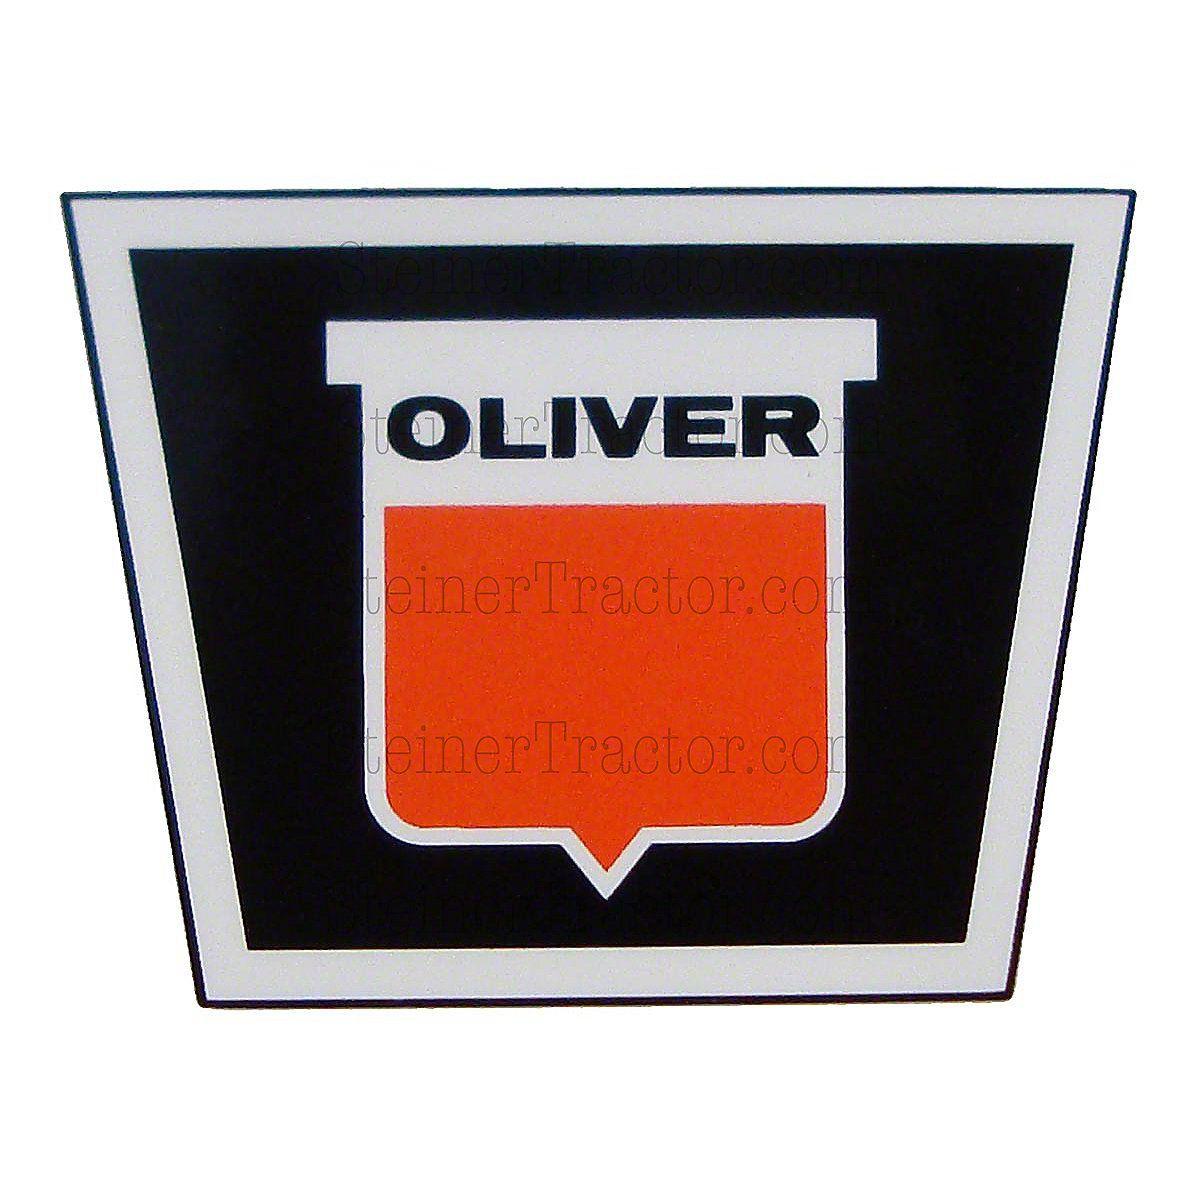 Oliver Tractor Logo - Oliver tractor Logos